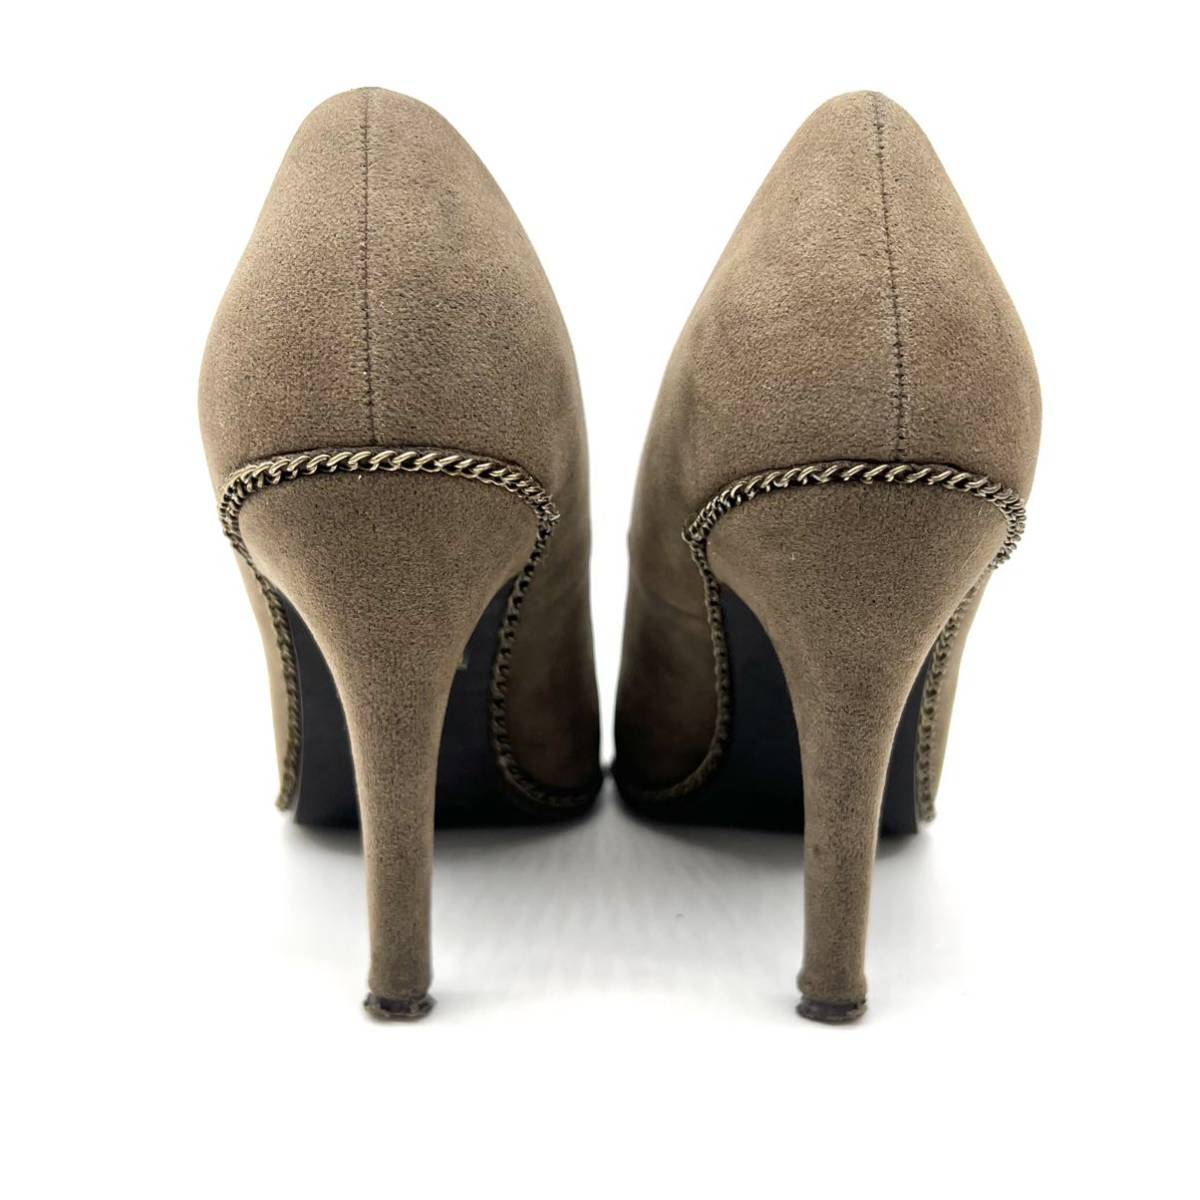  regular price 13490 jpy unghrid Lady Like Ungrid check combination pumps suede shoes heel M 24 74KHK khaki gray autumn lady's 